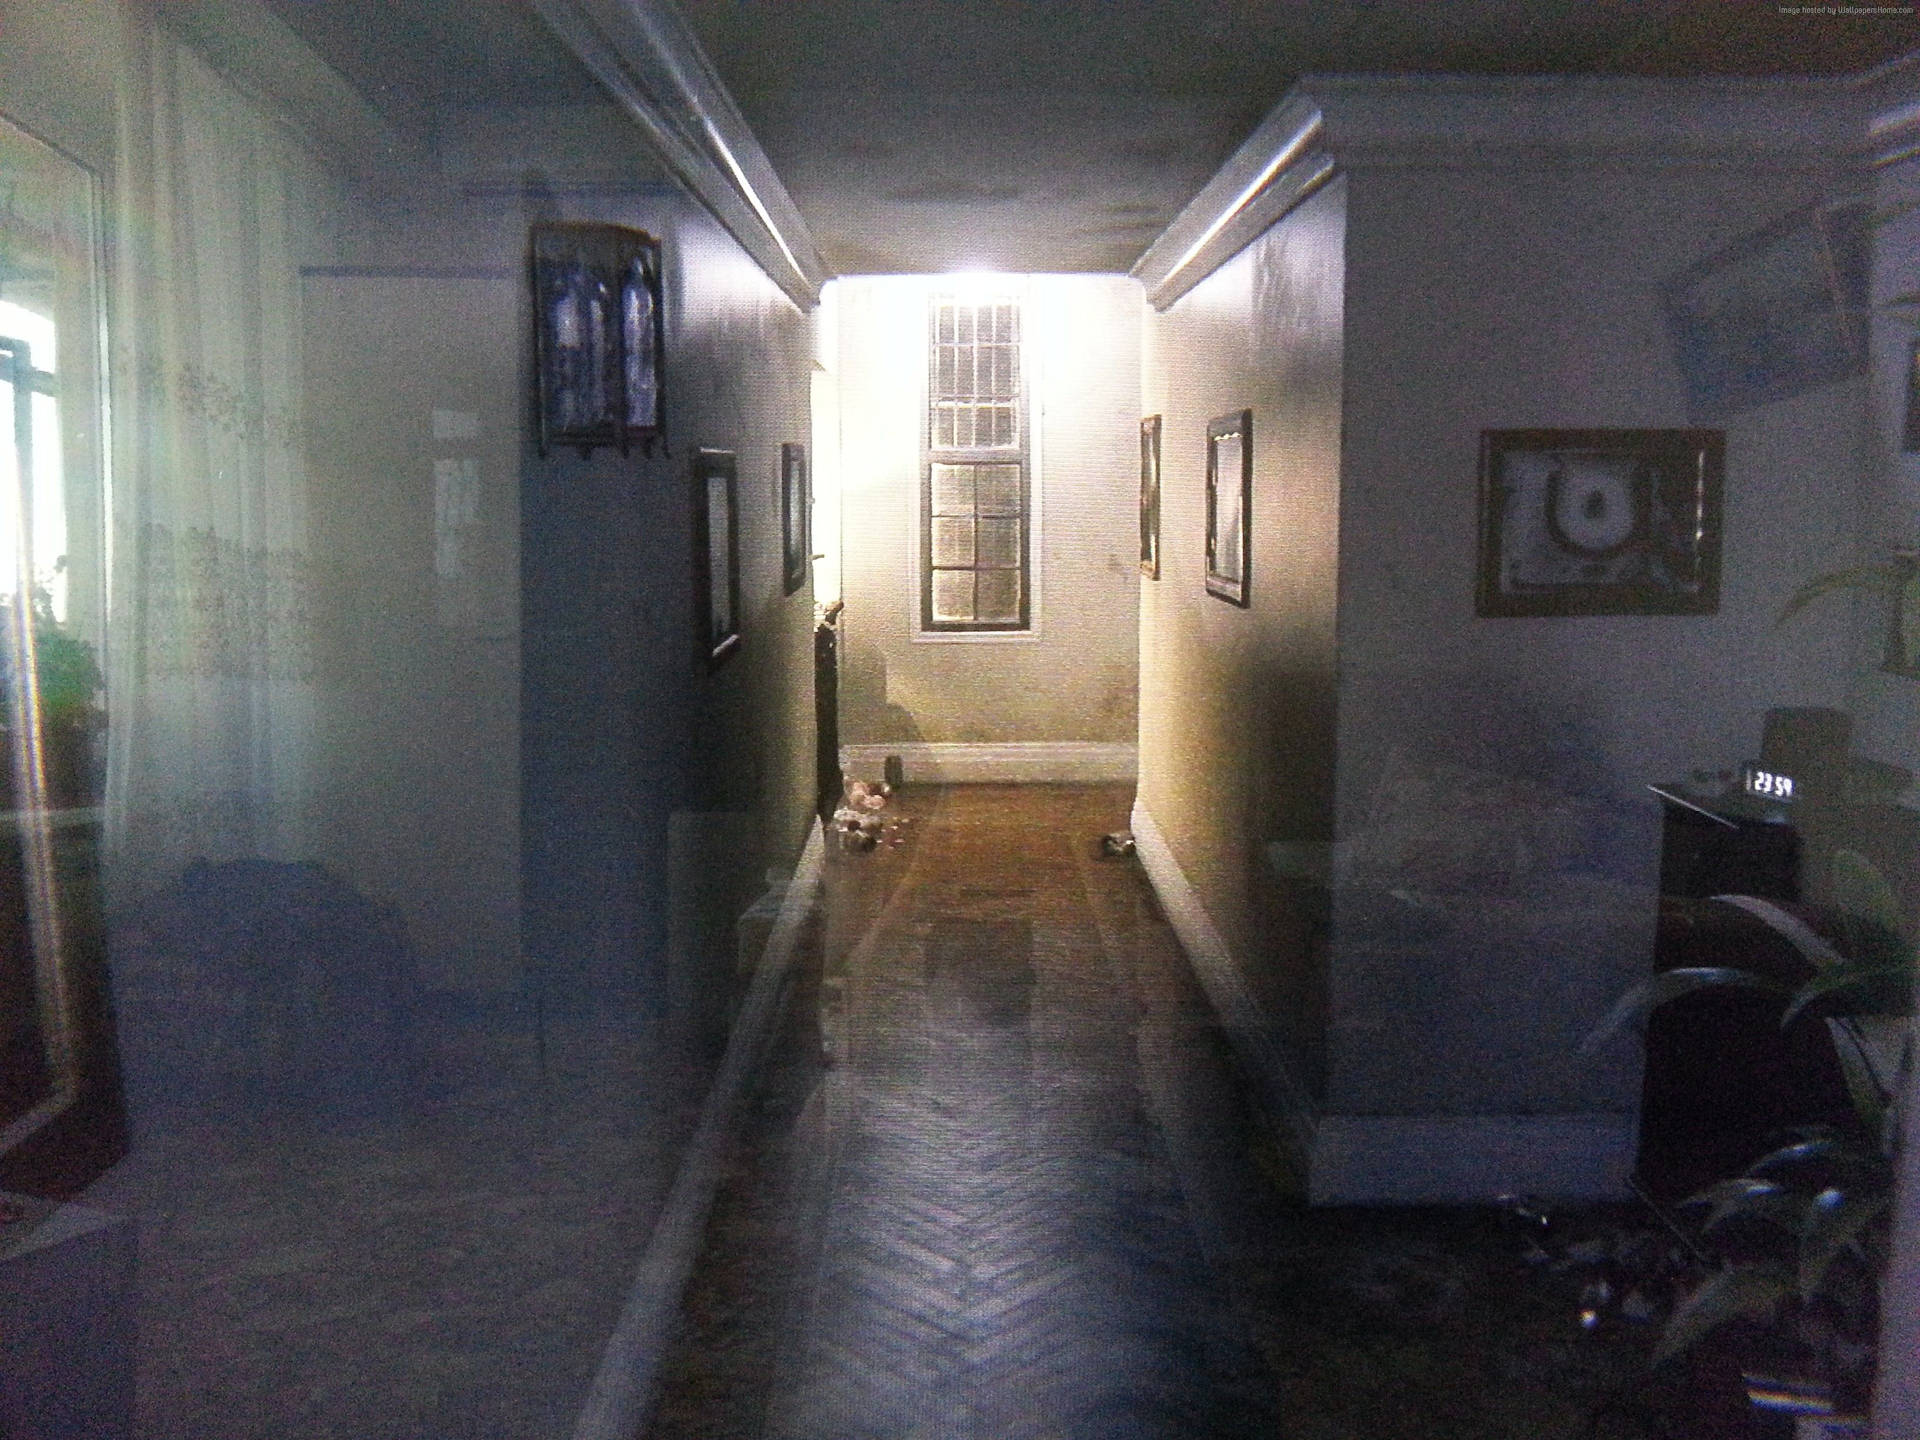 Spooky Silent Hill Hallway